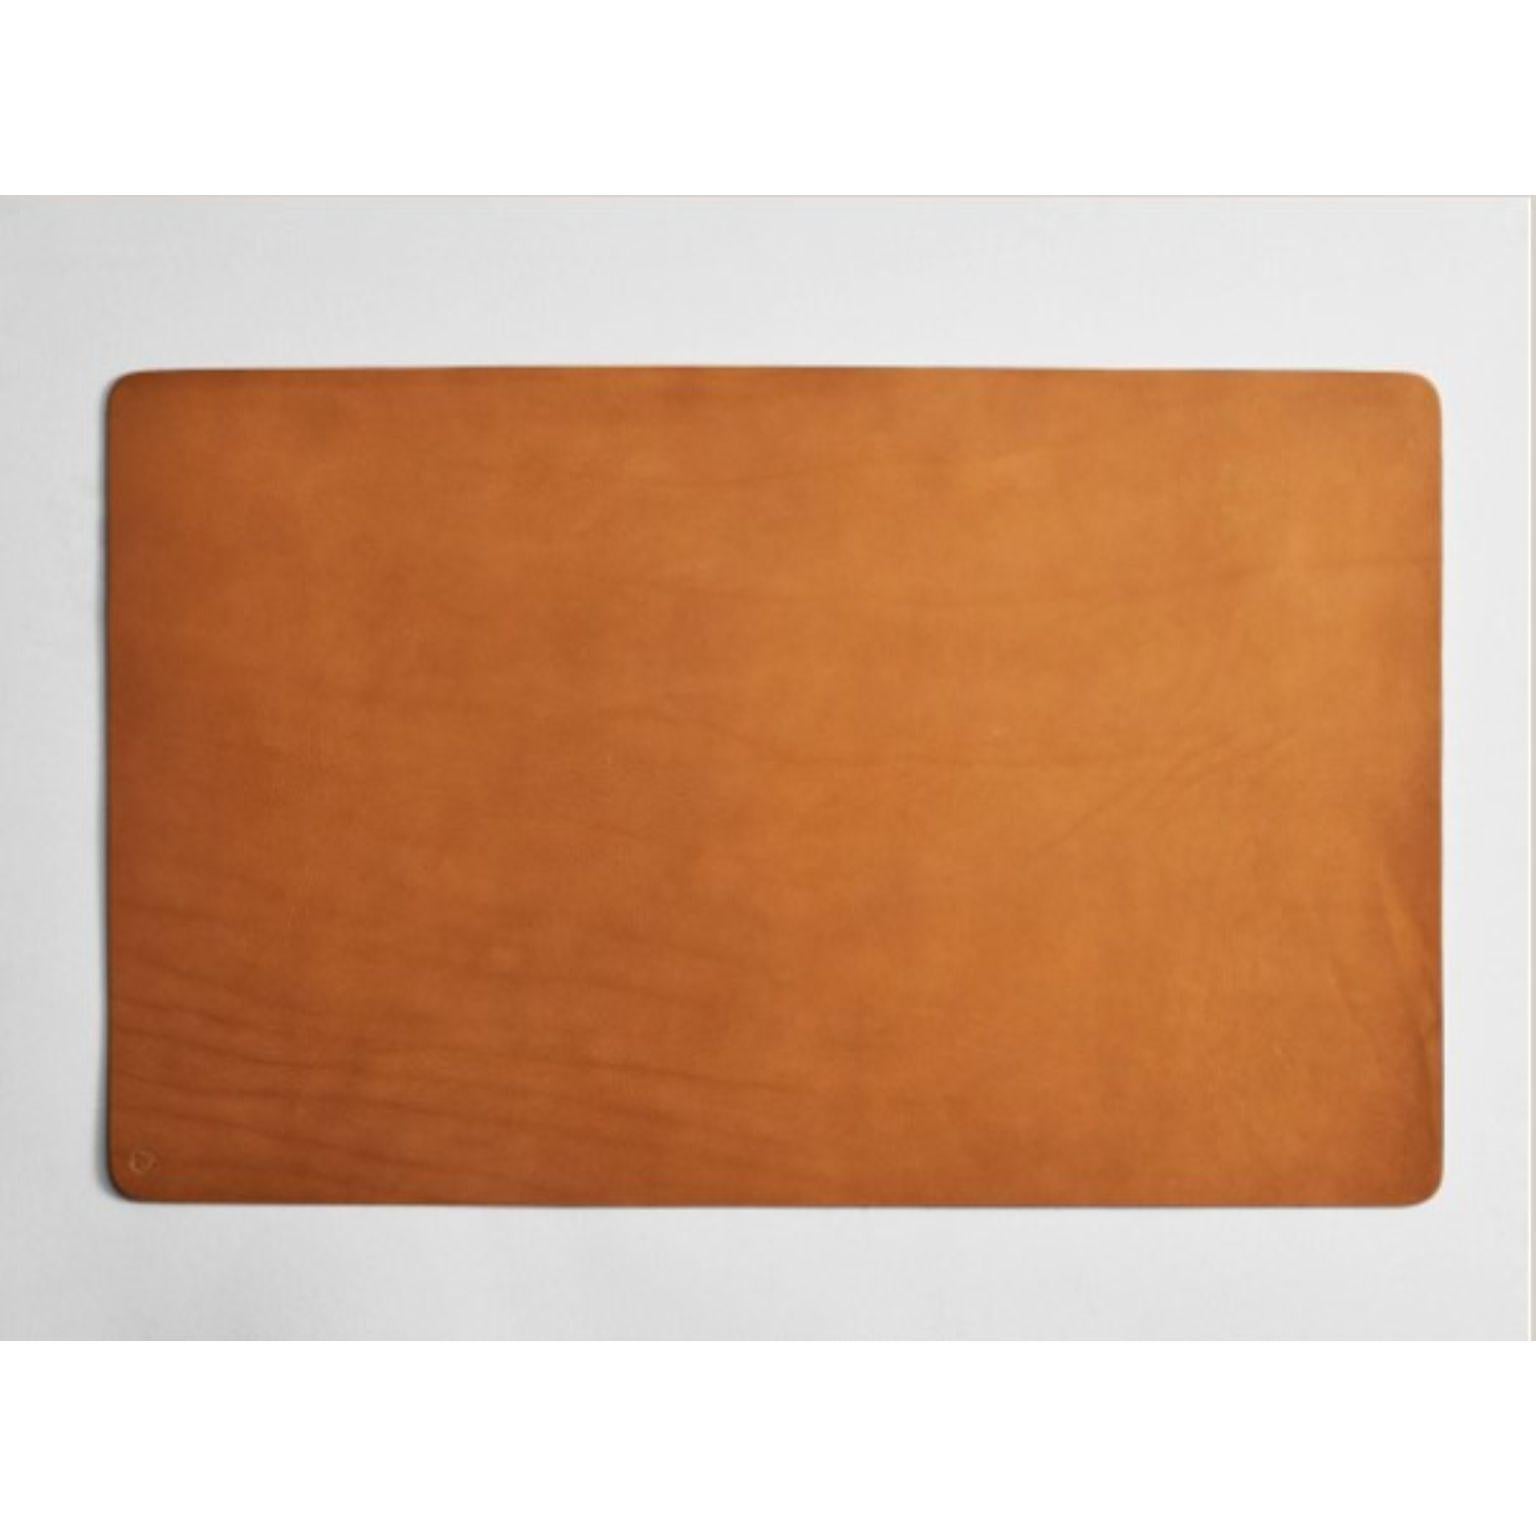 Australian Small Tan Leather Desk Mat by Henry Wilson For Sale